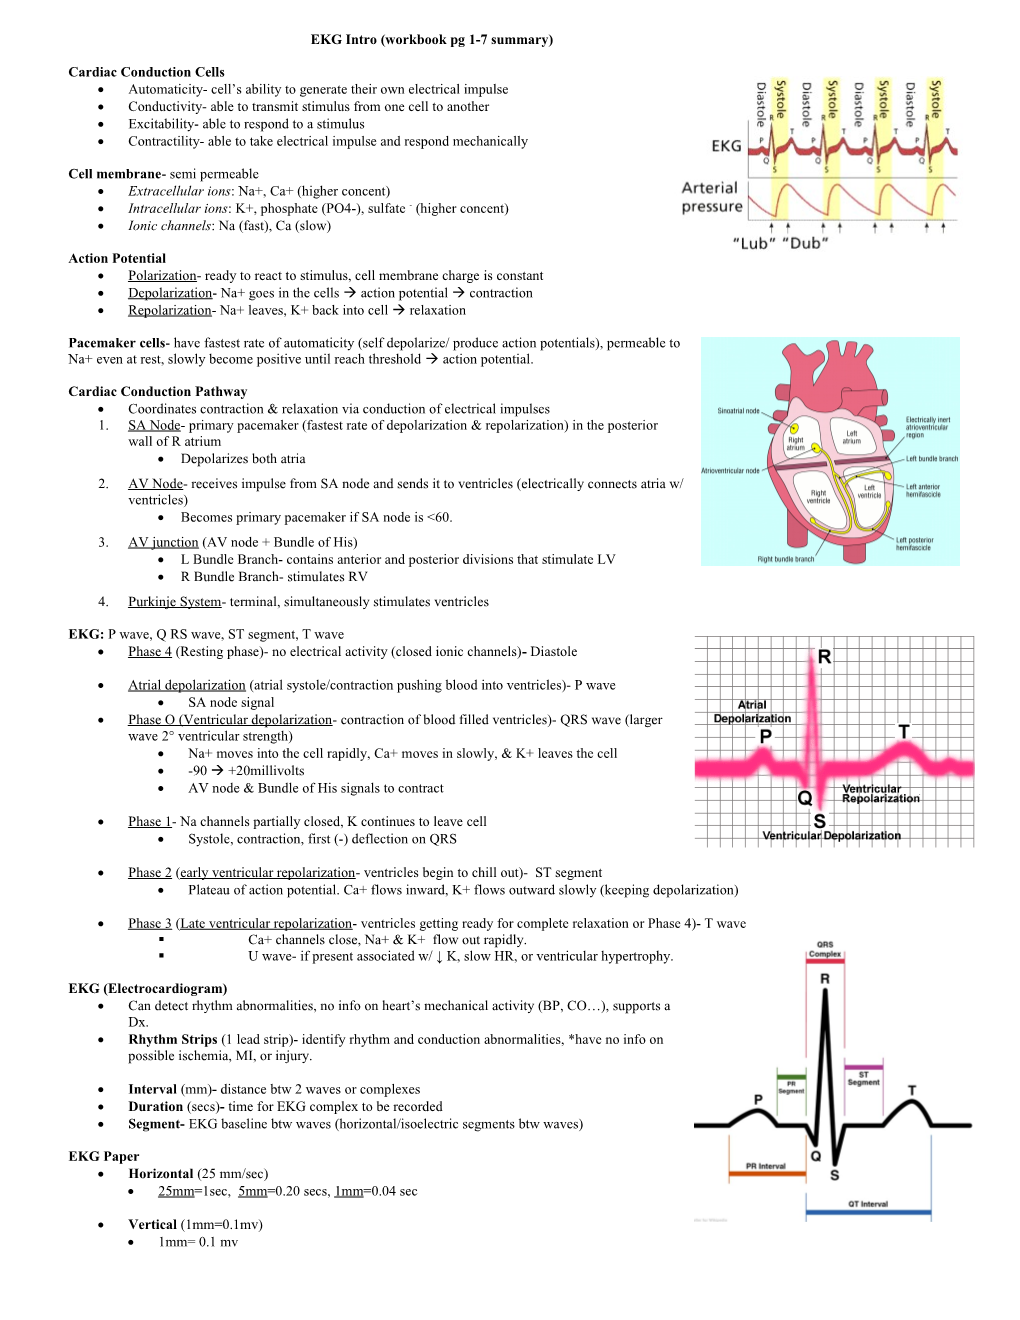 EKG and Interpretation